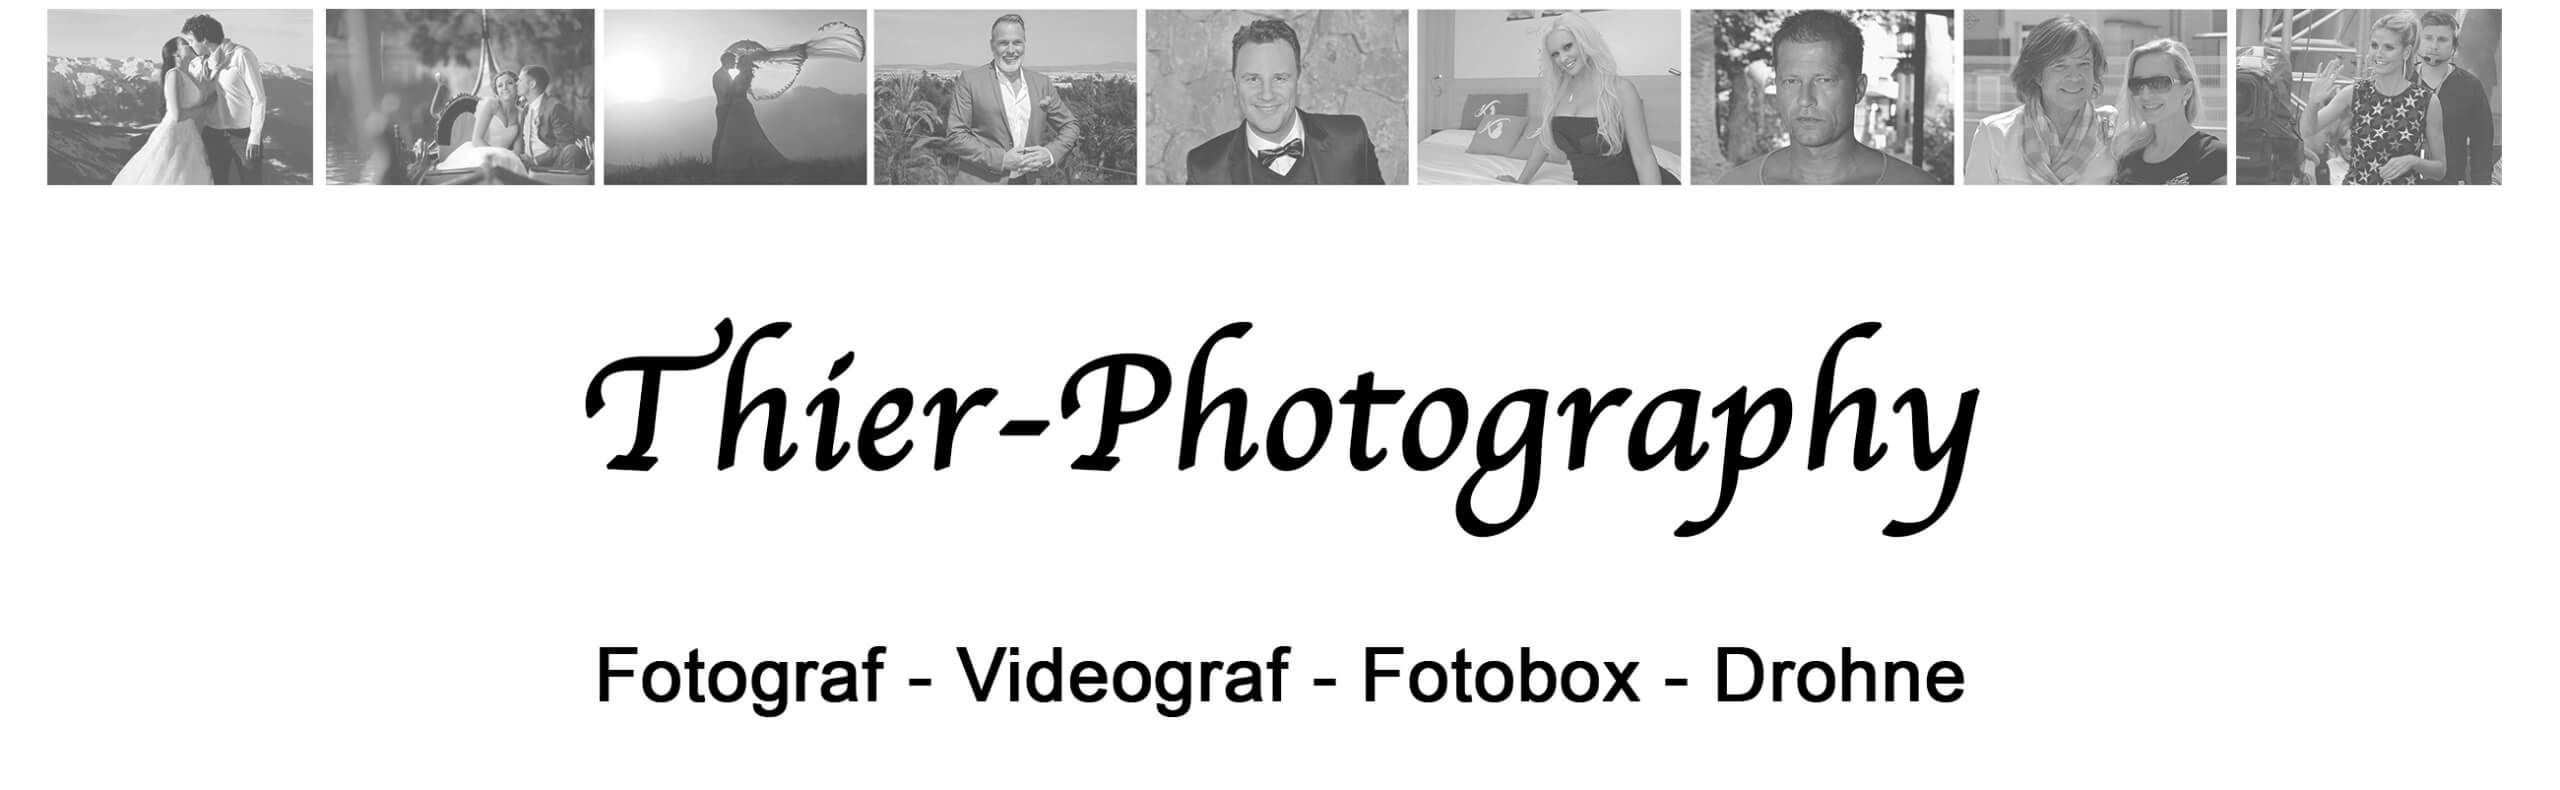 Fotograf-Hochzeitsfotograf -Videograf -Fotobox - Drohne - Kroatien